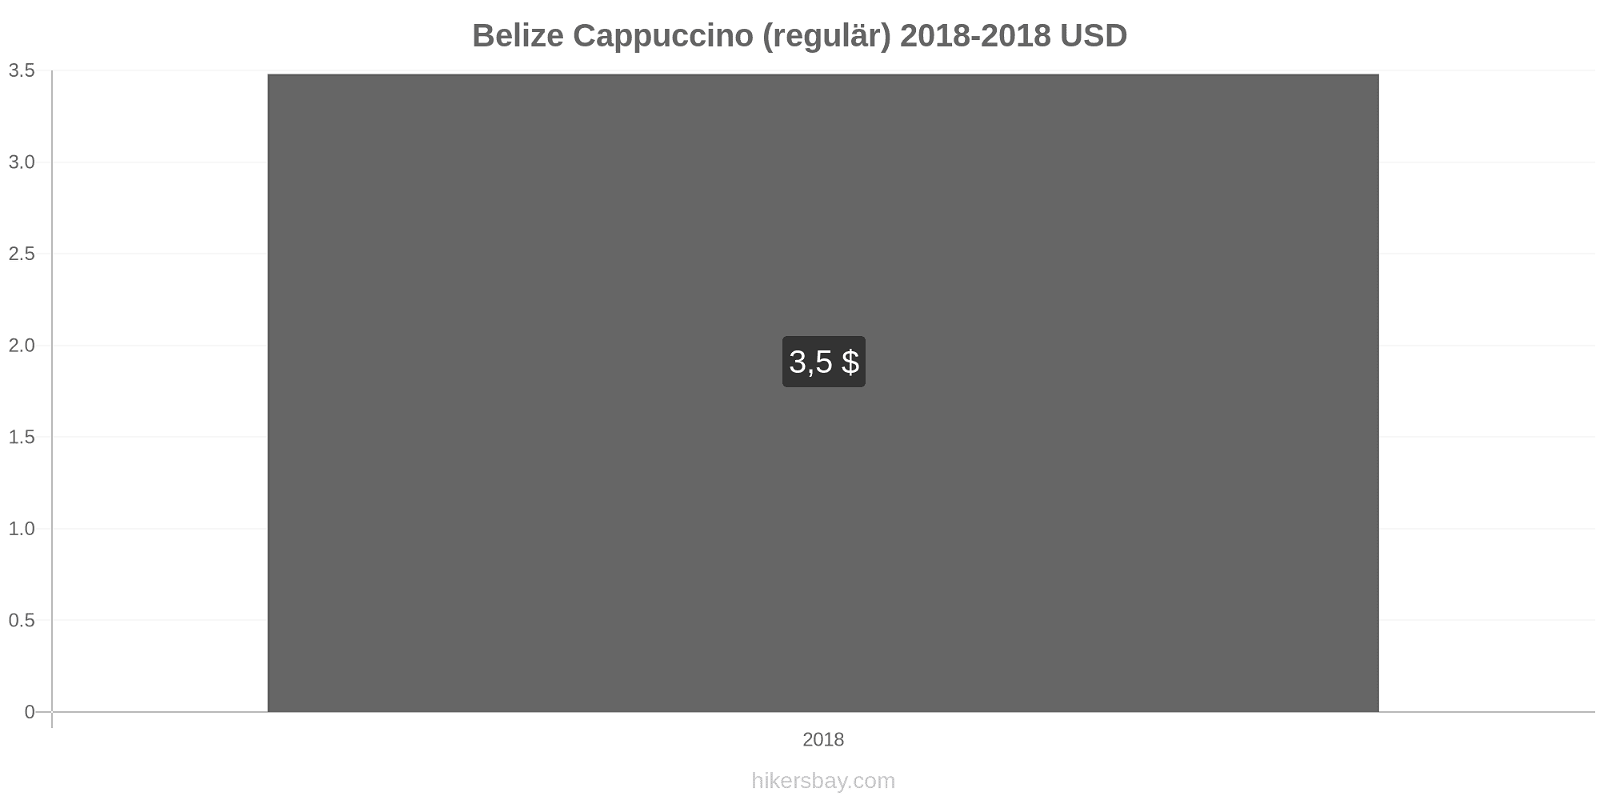 Belize Preisänderungen Cappuccino (regulär) hikersbay.com